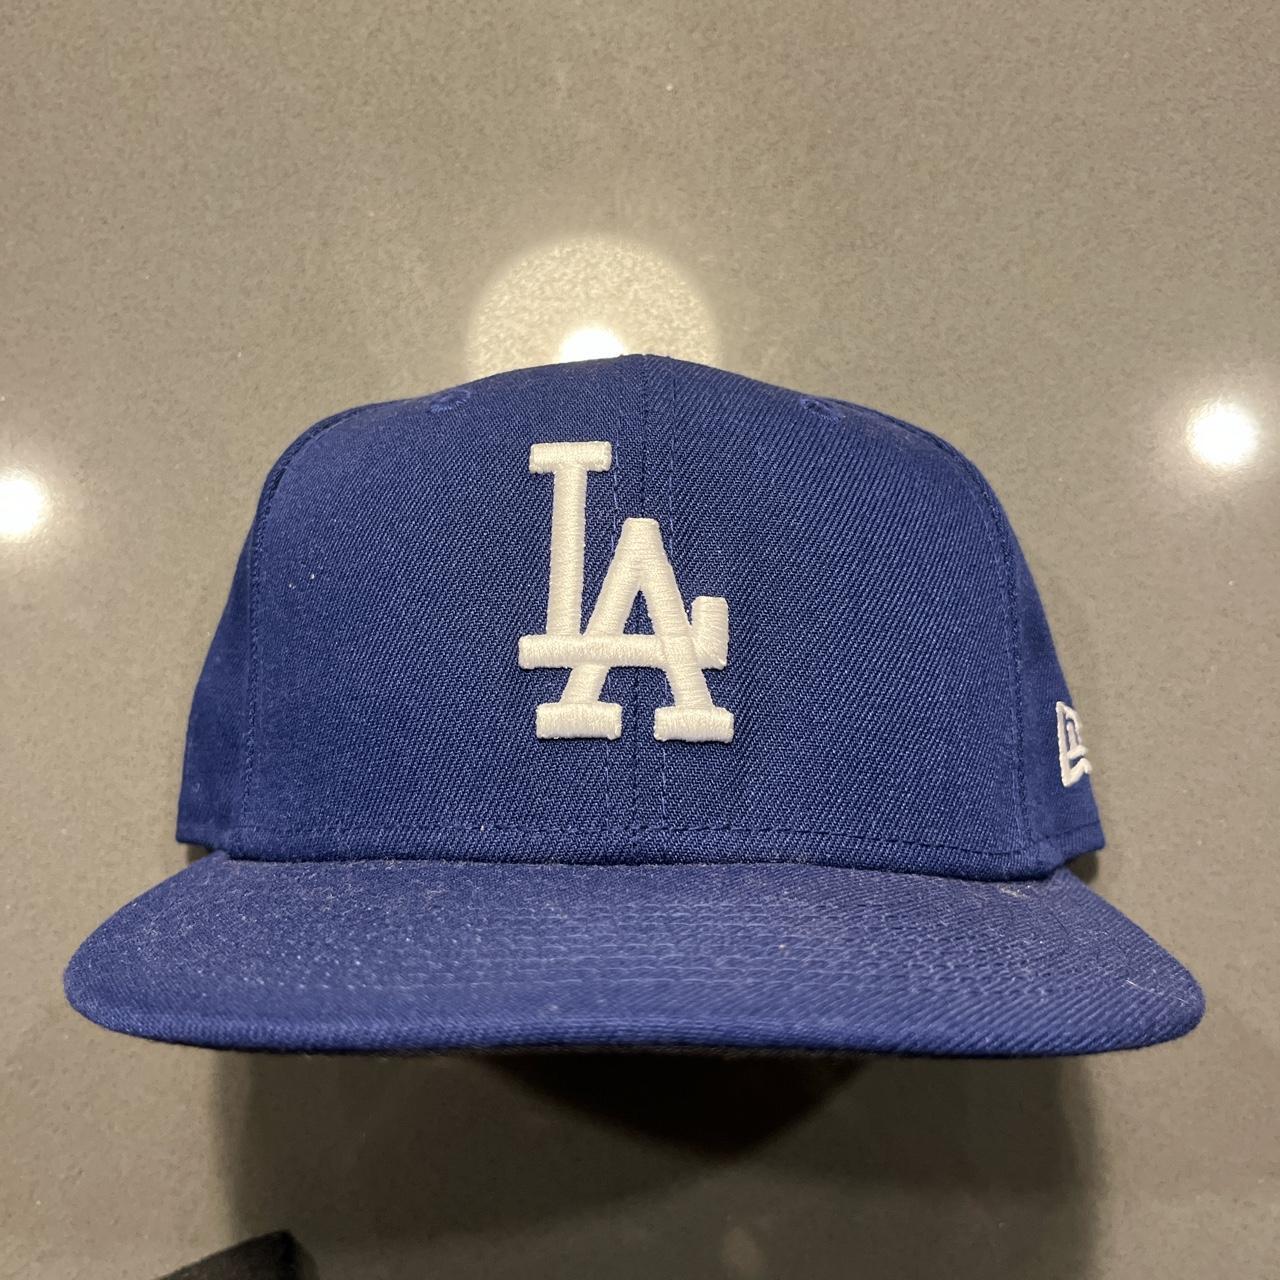 New Era LA Dodgers Fitted Hat size 7 3/8 Worn 1x - Depop